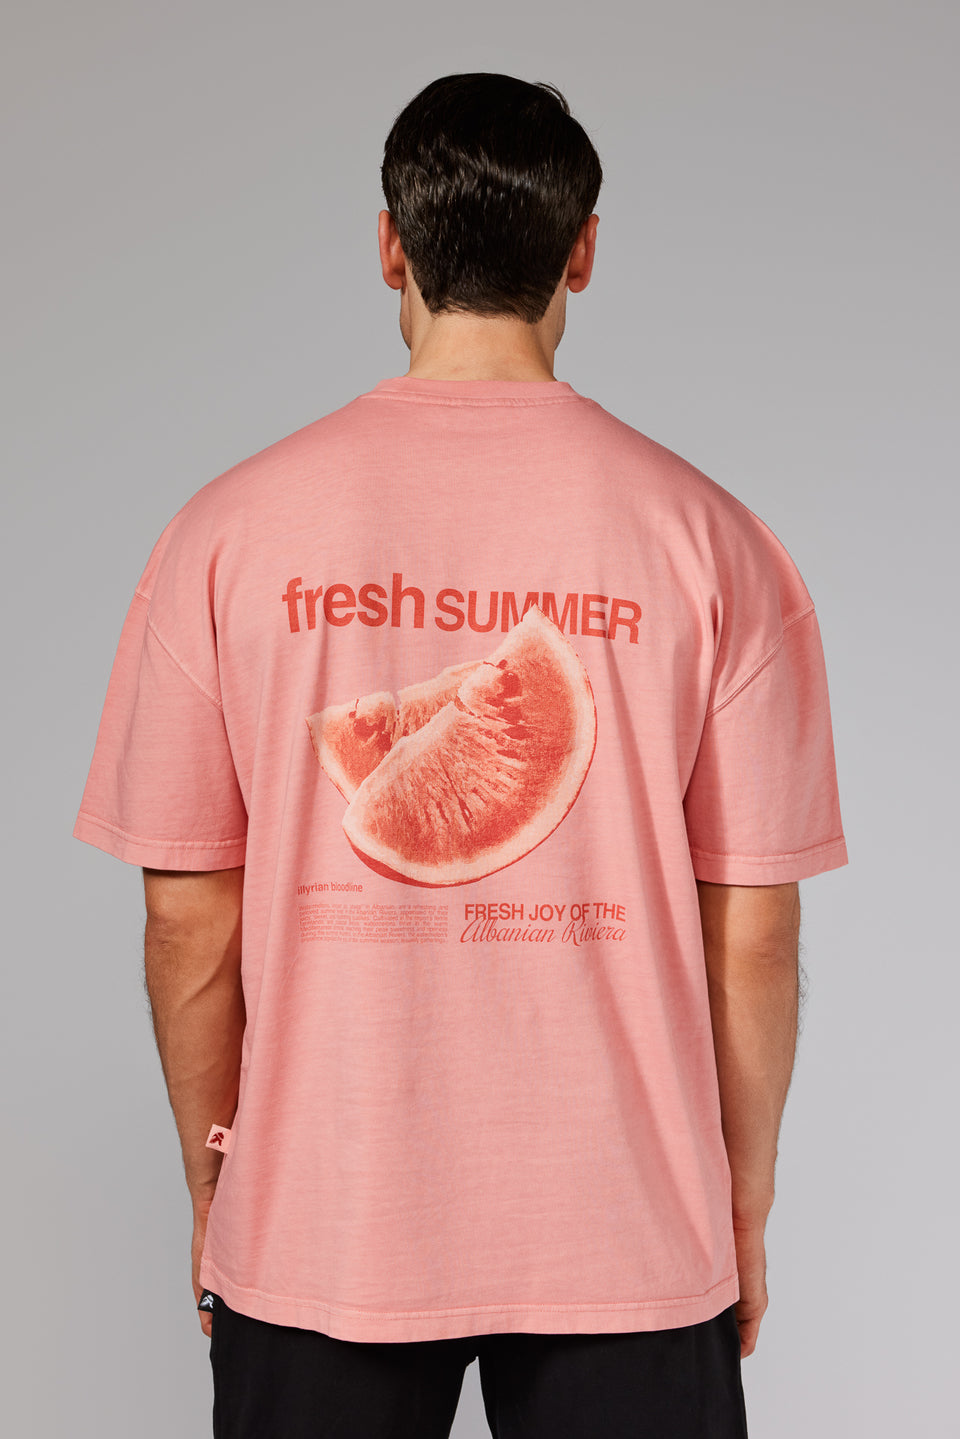 Illyrian Watermelon T-Shirt